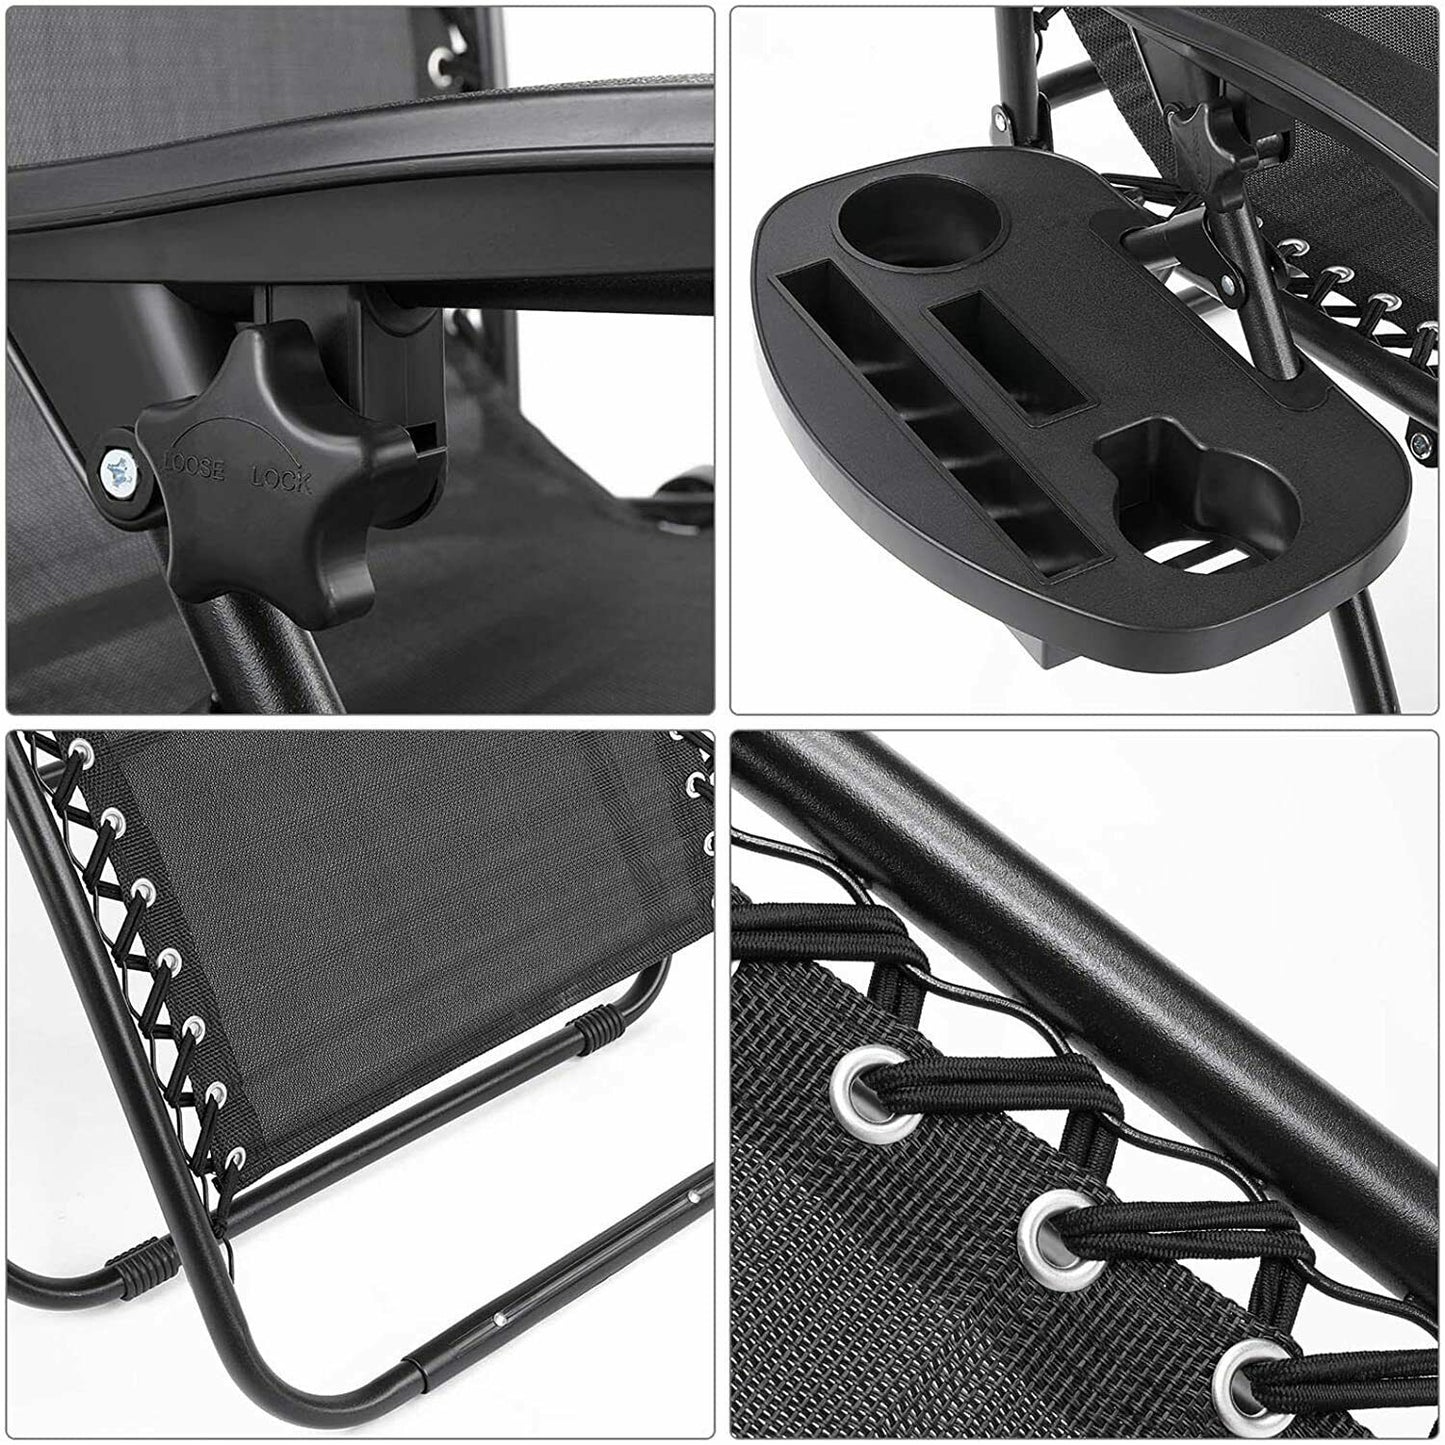 2PC Garden Sun Lounger Set with Table Folding Flexible Adjustable Zero Gravity Recliner Chair Seat Indoor/Outdoor 2 Colors